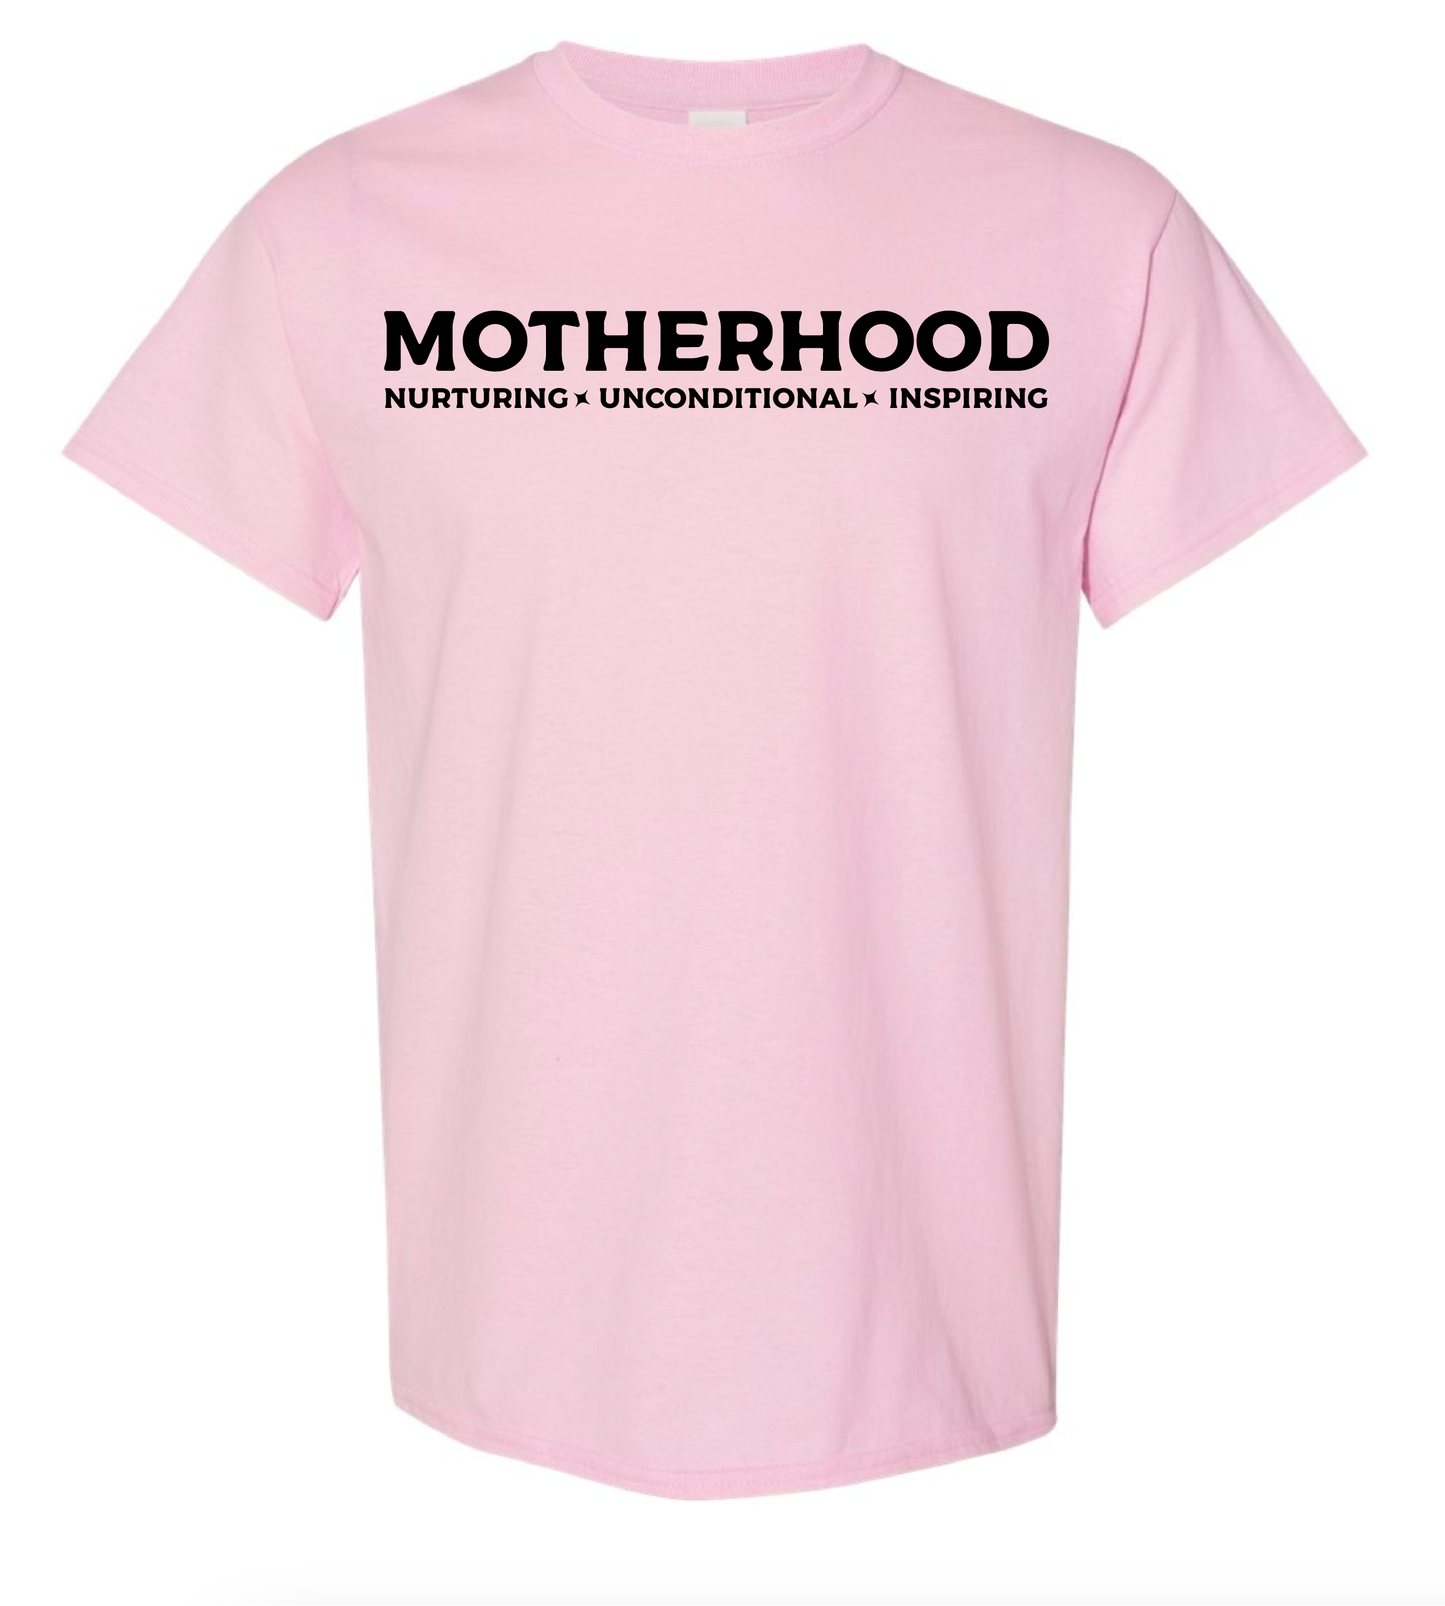 Motherhood T-shirt | Nurturing, Unconditional, and Inspiring